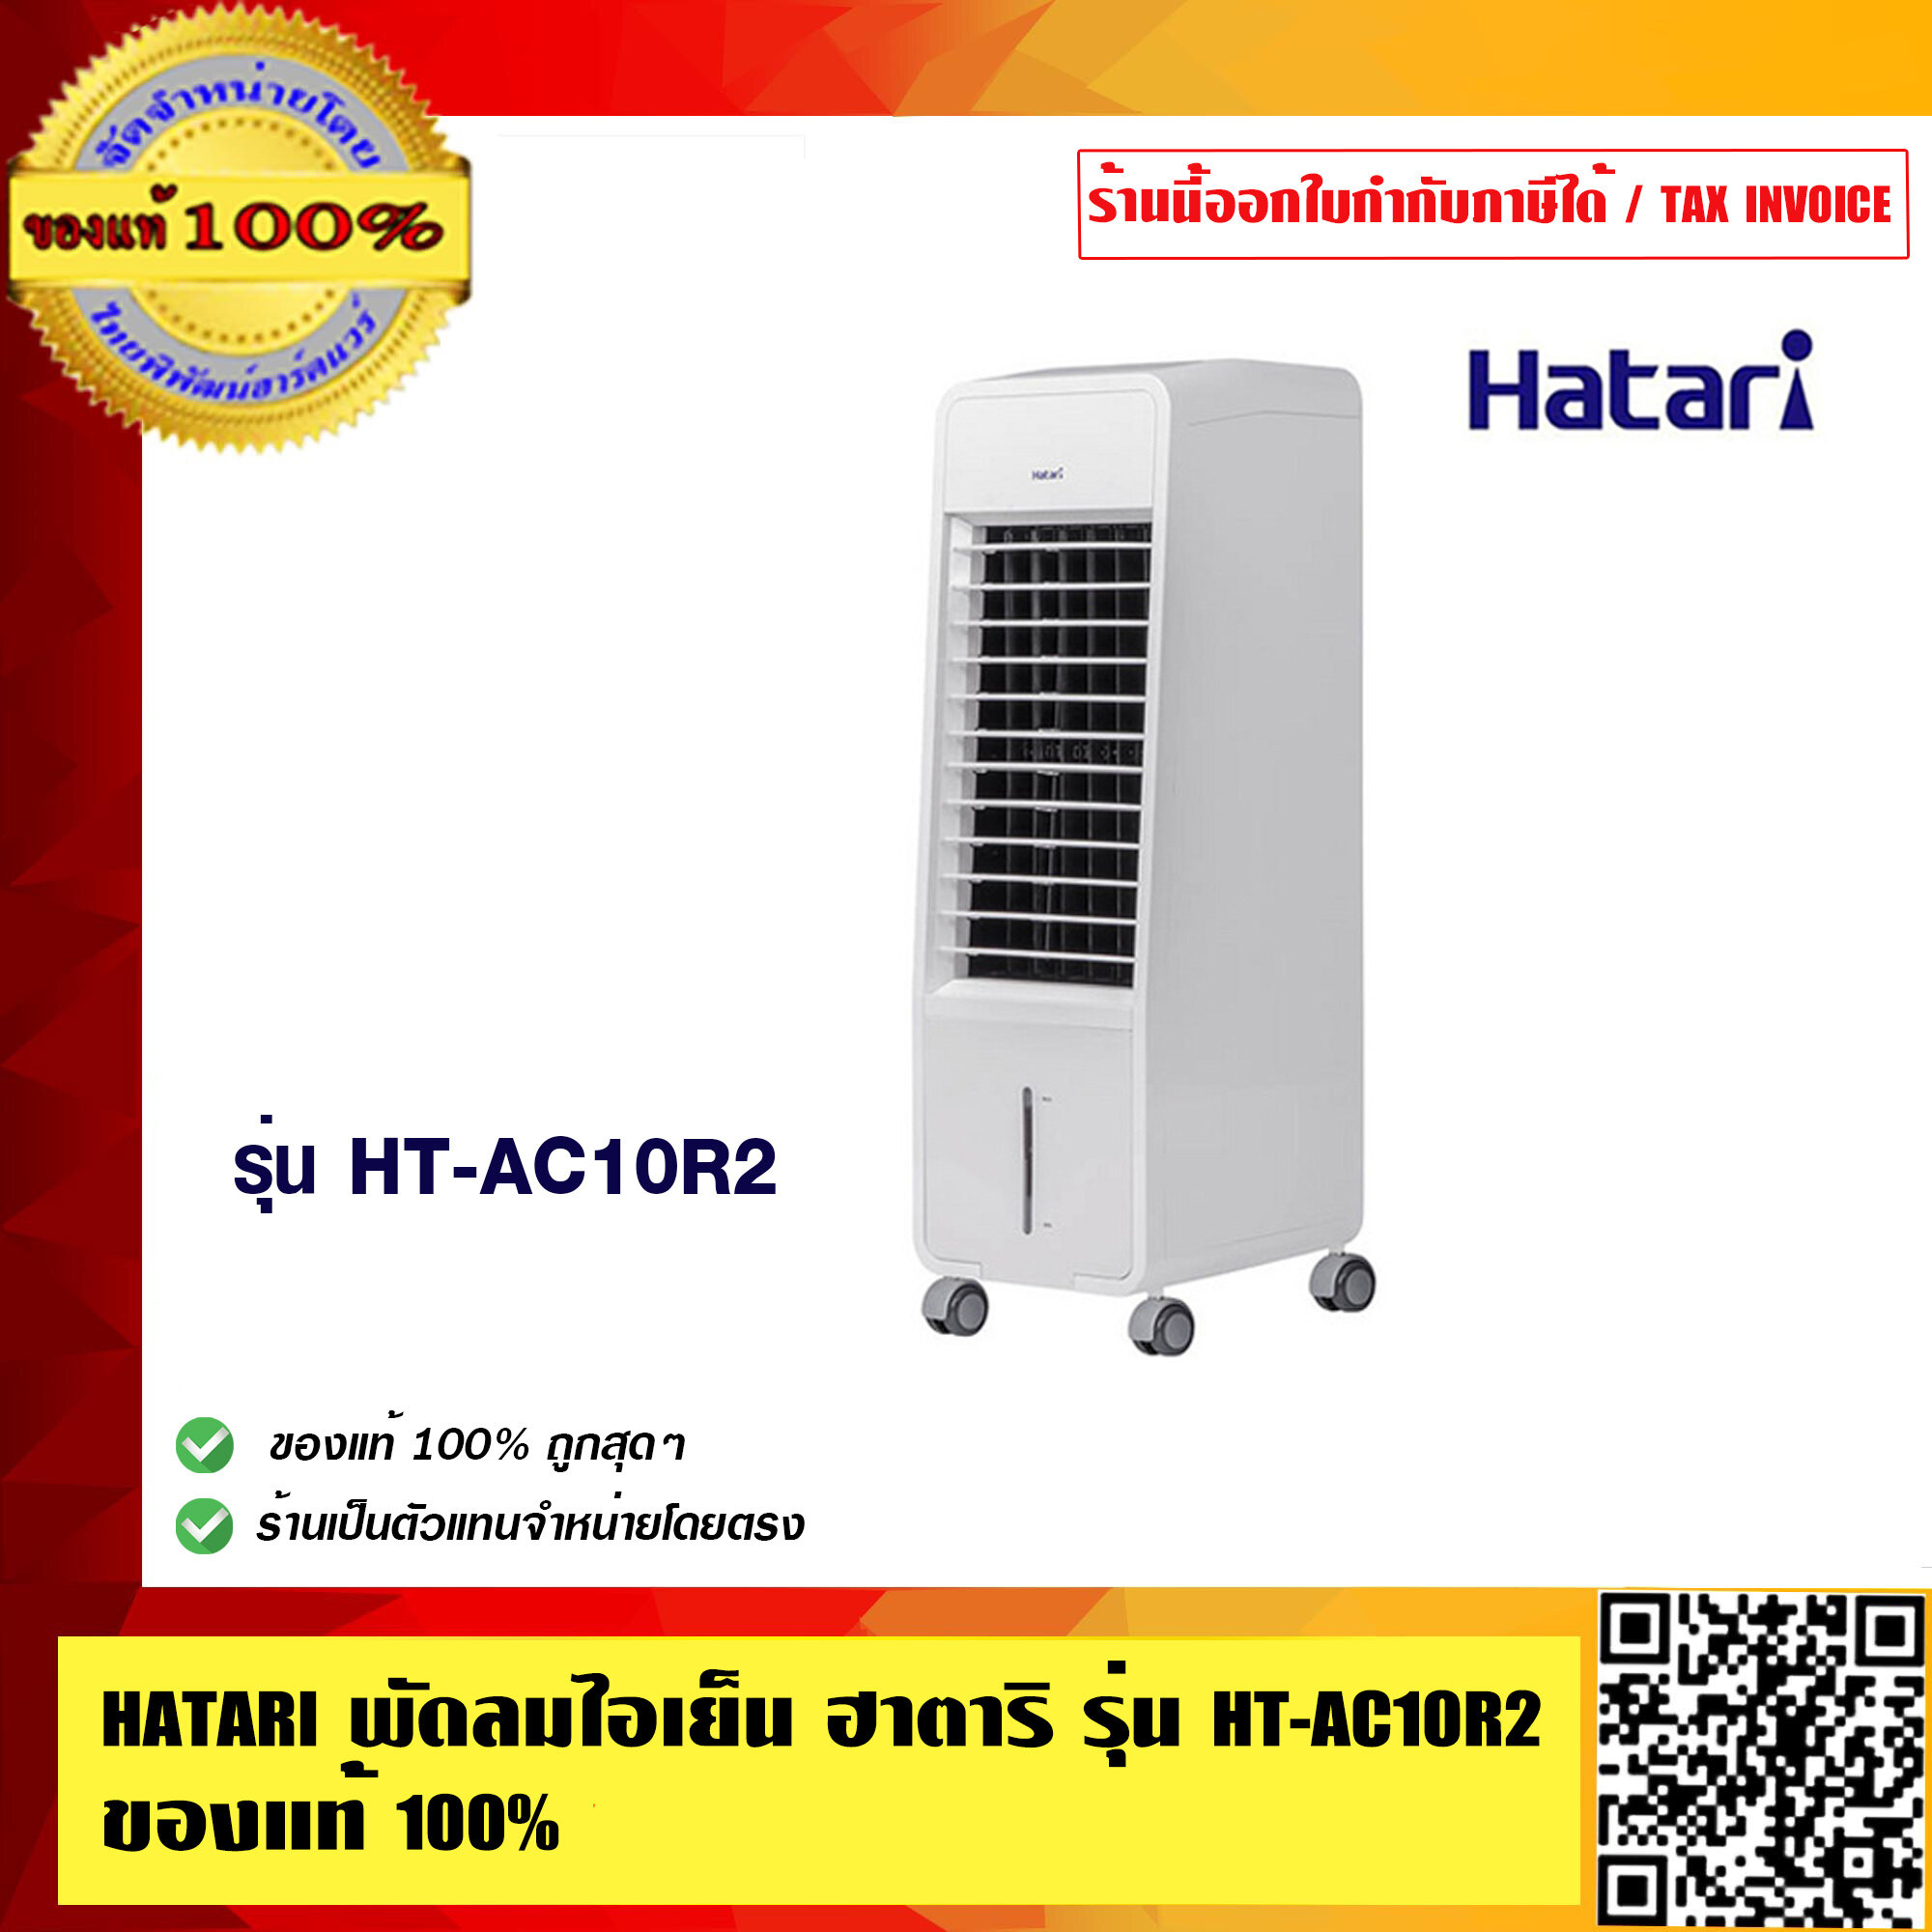 HATARI พัดลมไอเย็น ฮาตาริ รุ่น HT-AC10R2 พร้อมเจลทำความเย็น 1 แผ่น  ของแท้ 100% ร้านเป็นตัวแทนจำหน่ายโดยตรง